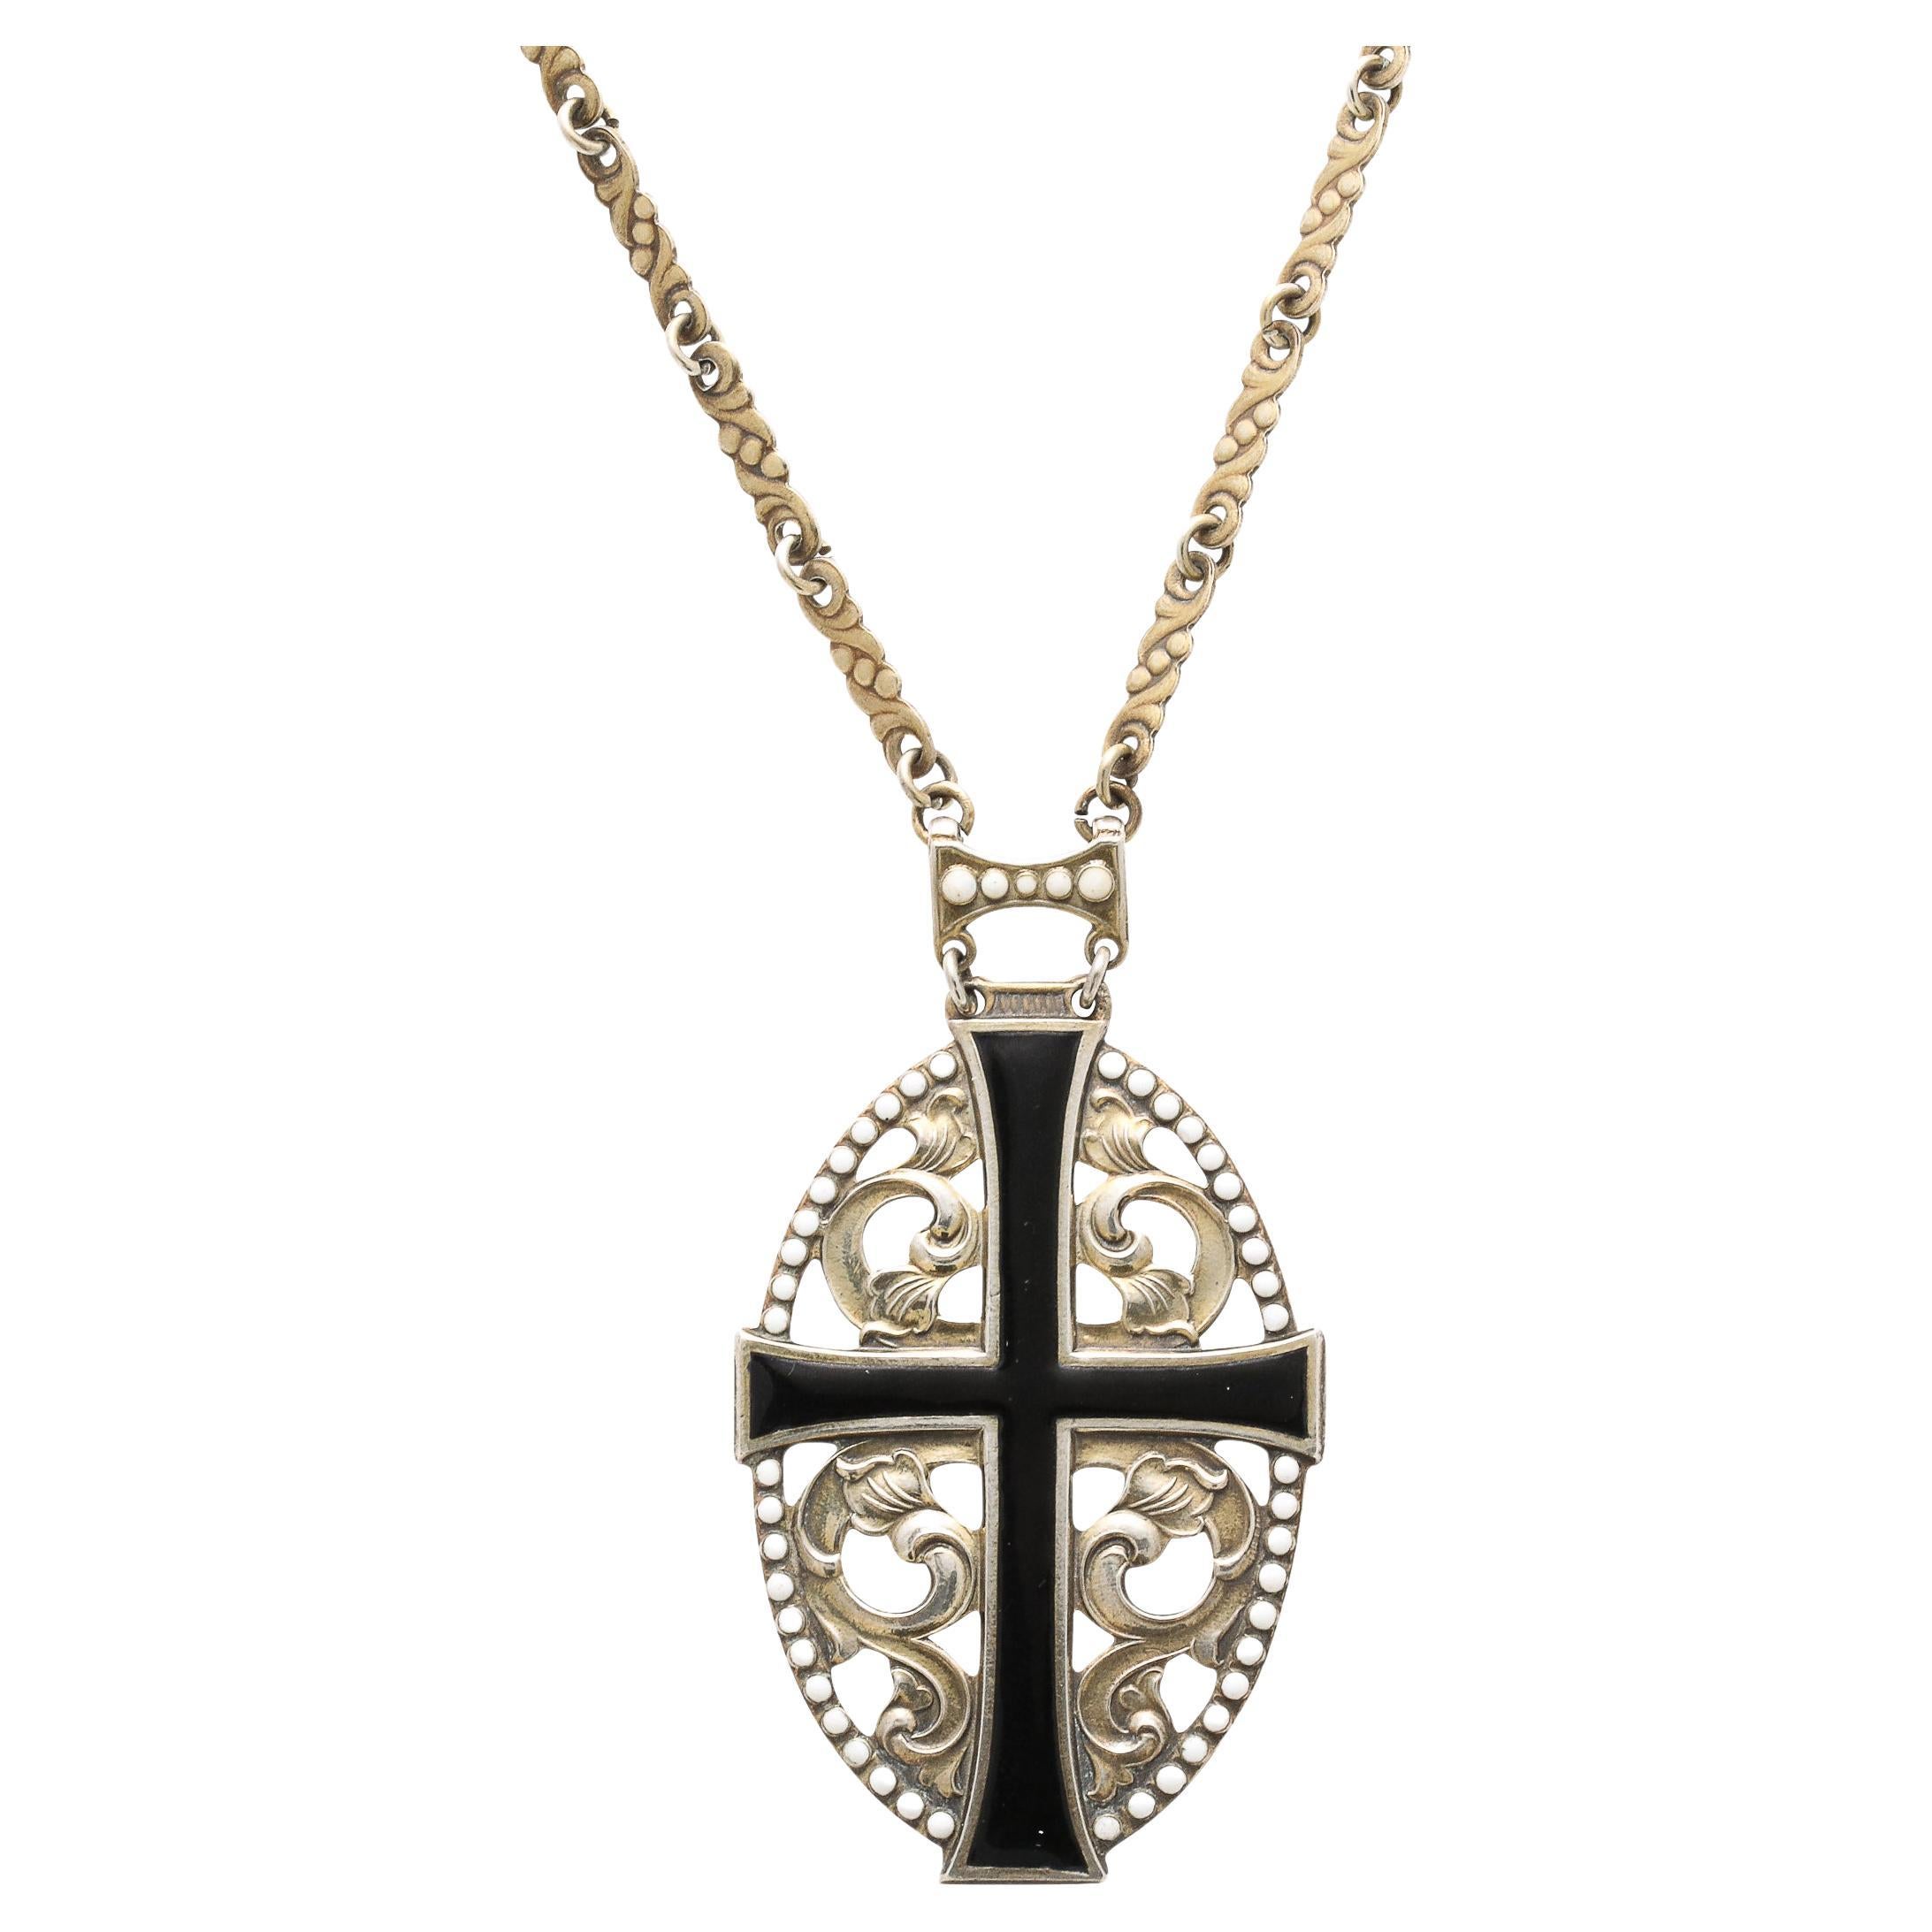 Antique Gilt Silver & Enamel Decorated Openwork Cross Pendant Necklace For Sale